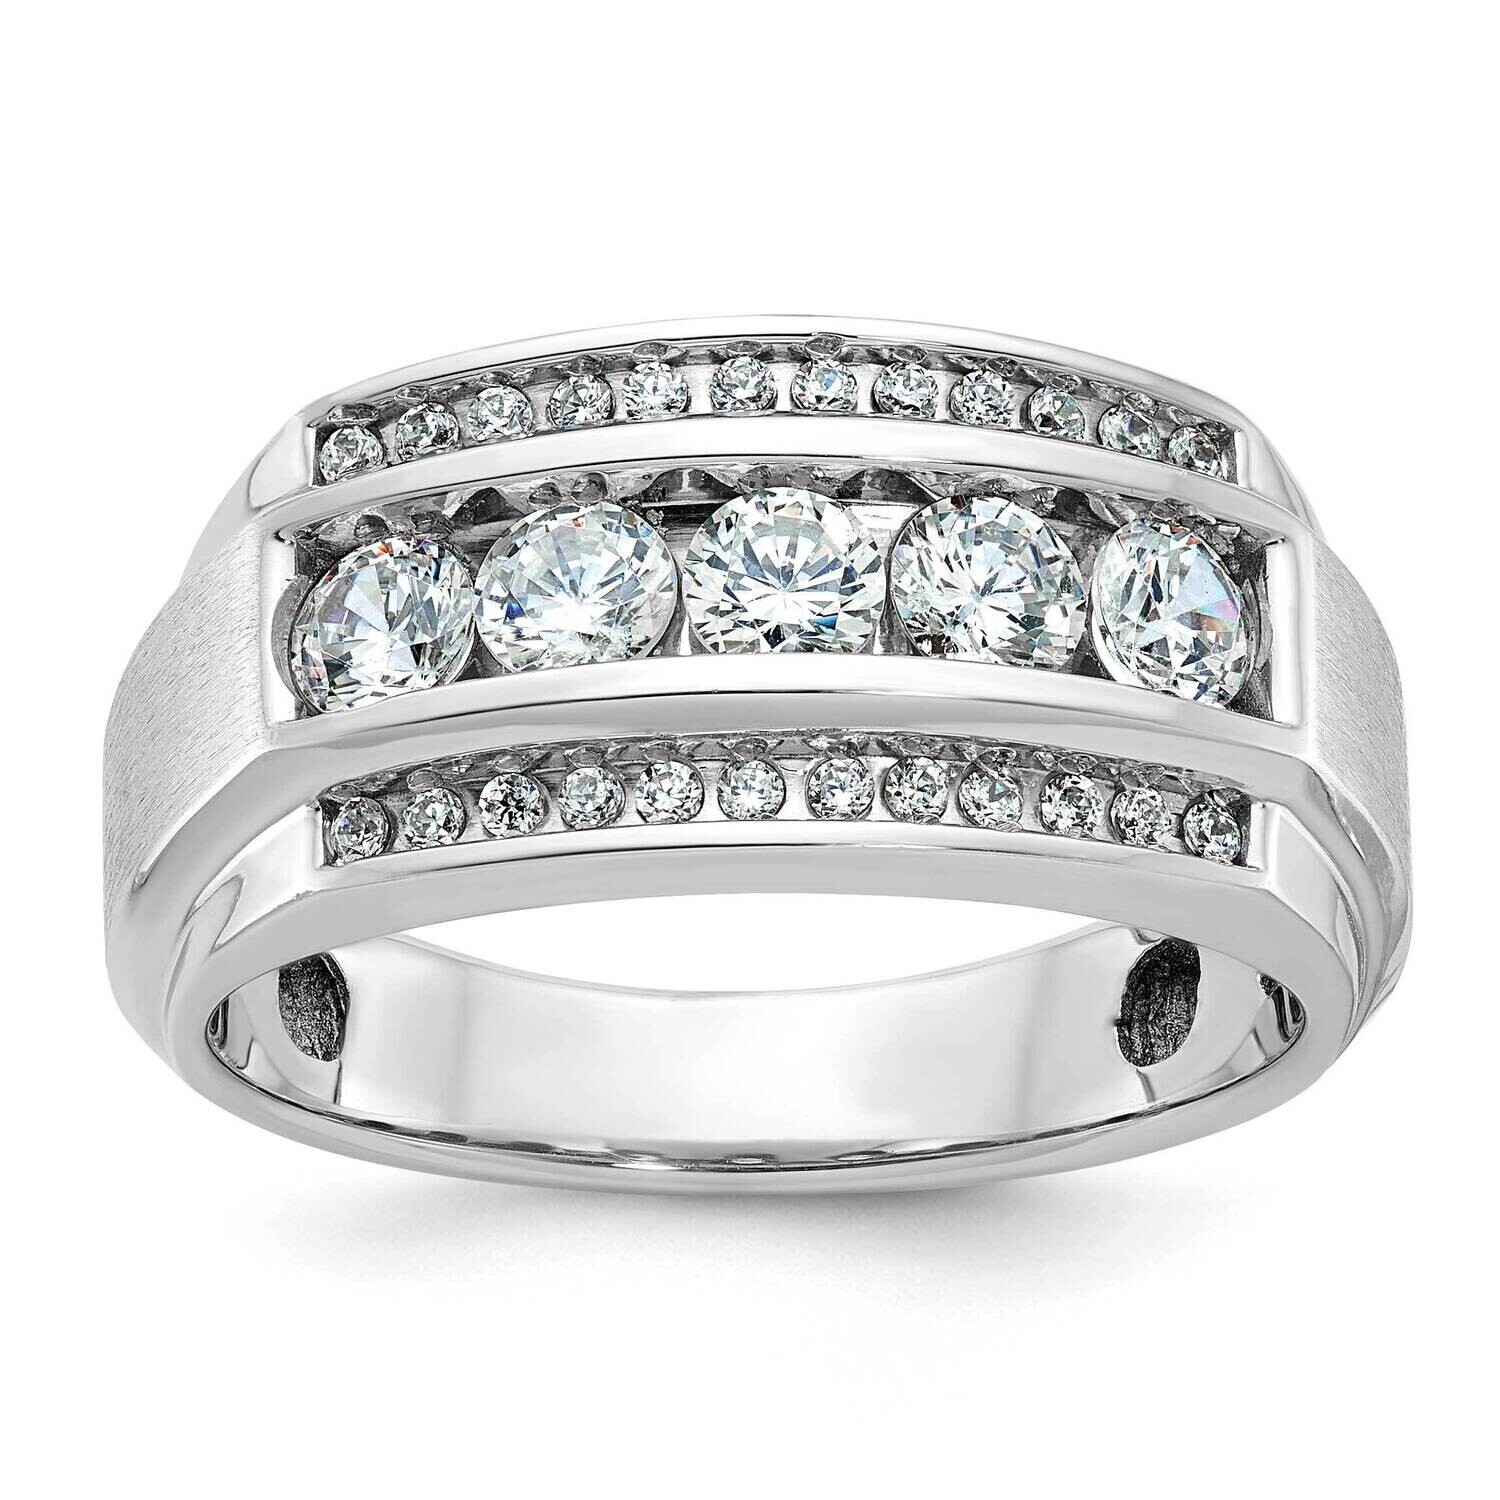 Ibgoodman Men's Polished Satin 3-Row 1 1/4 Carat A Quality Diamond Ring 10k White Gold B64046-0WA